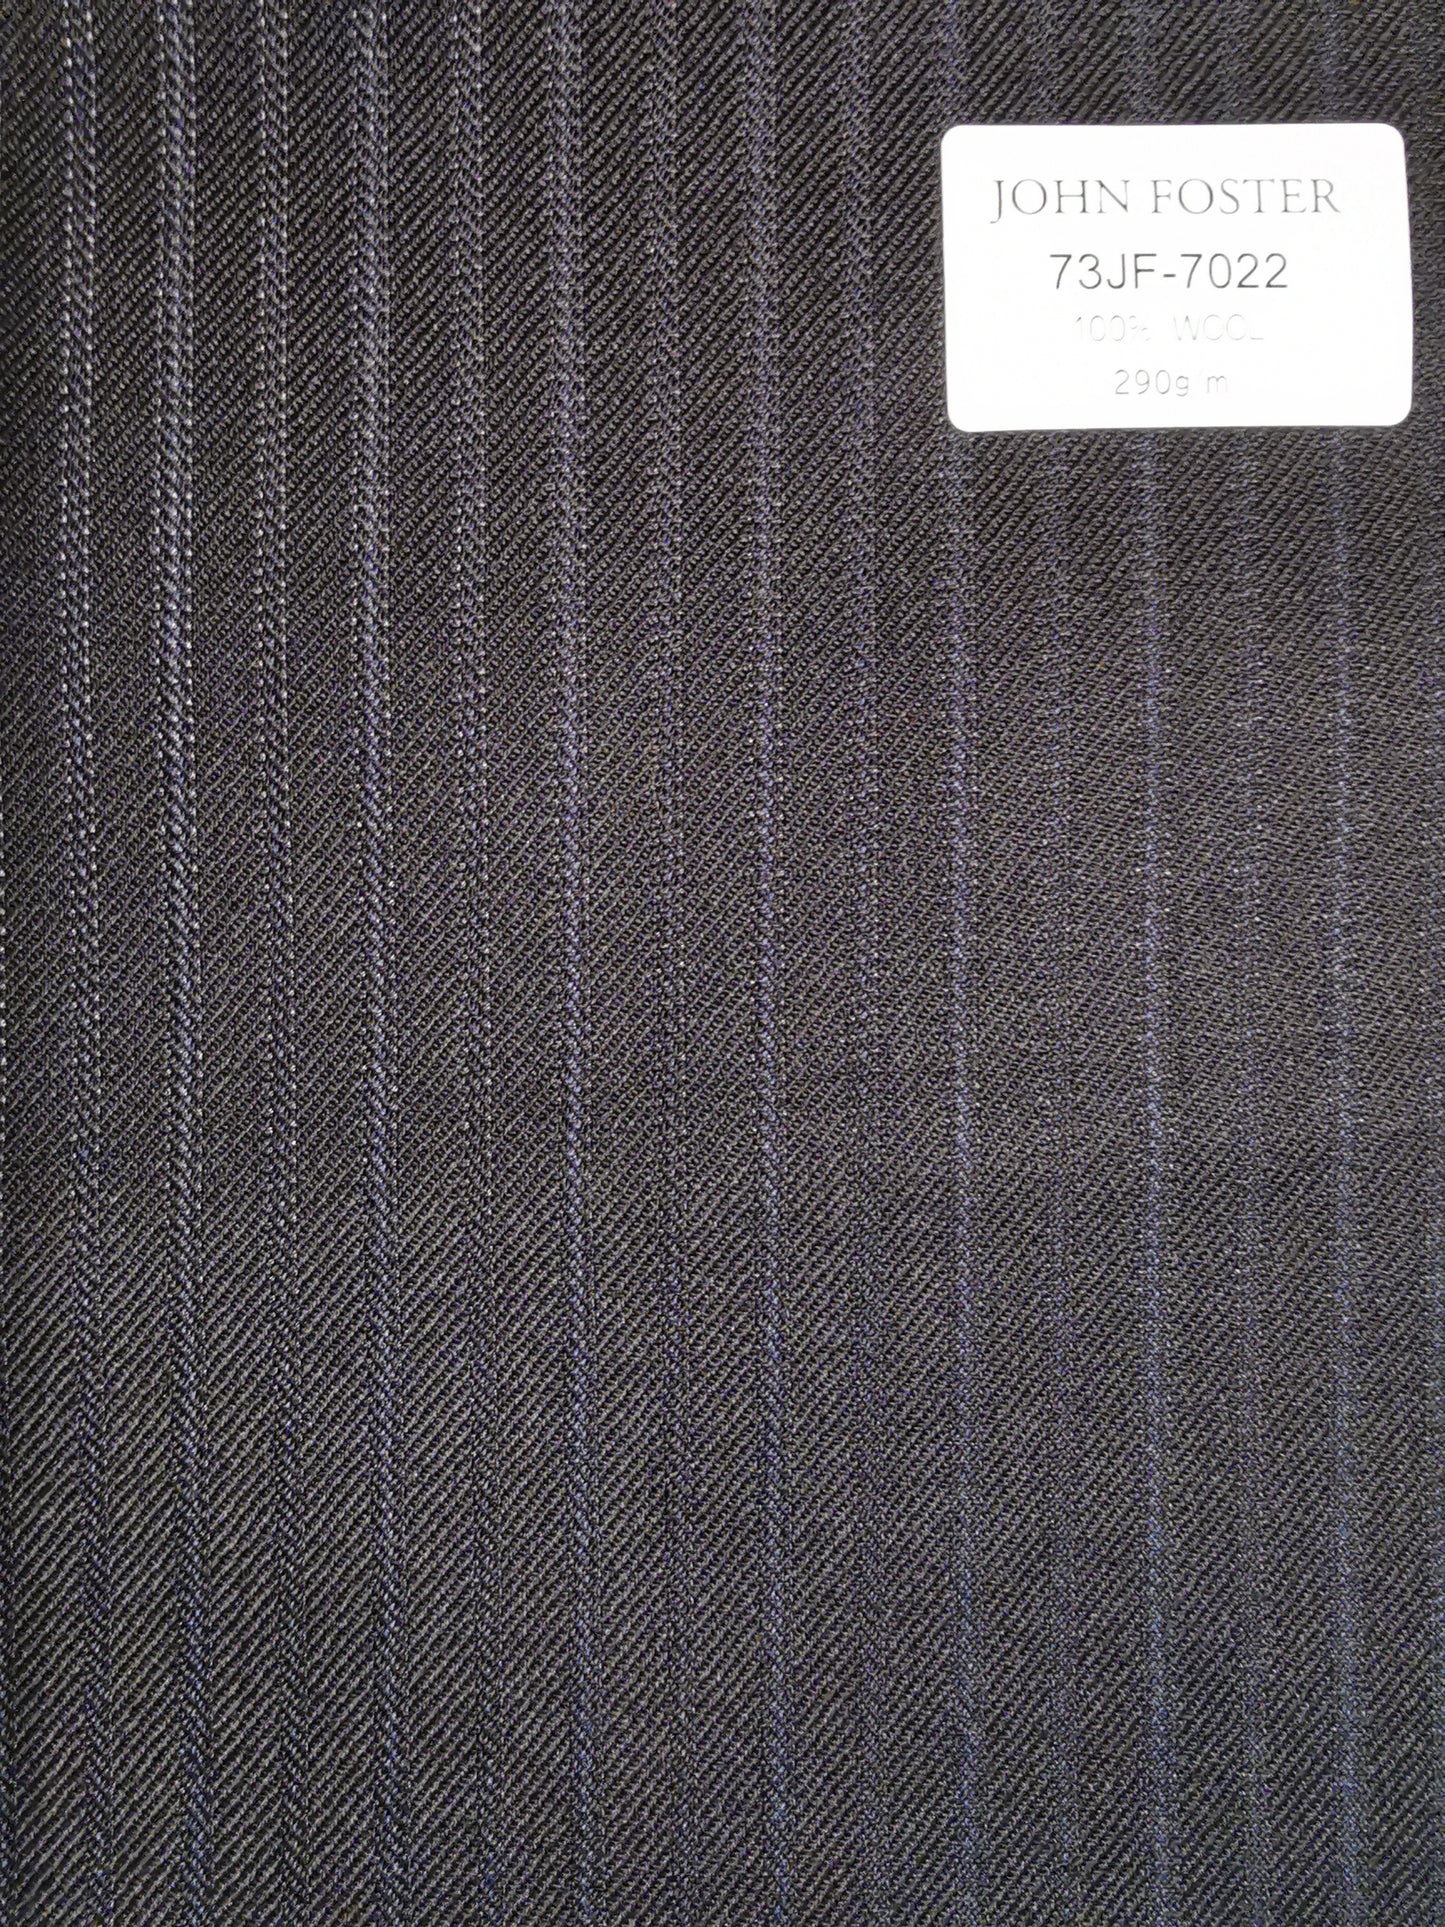 Brand : John Foster Textile ID : 73JF-7022